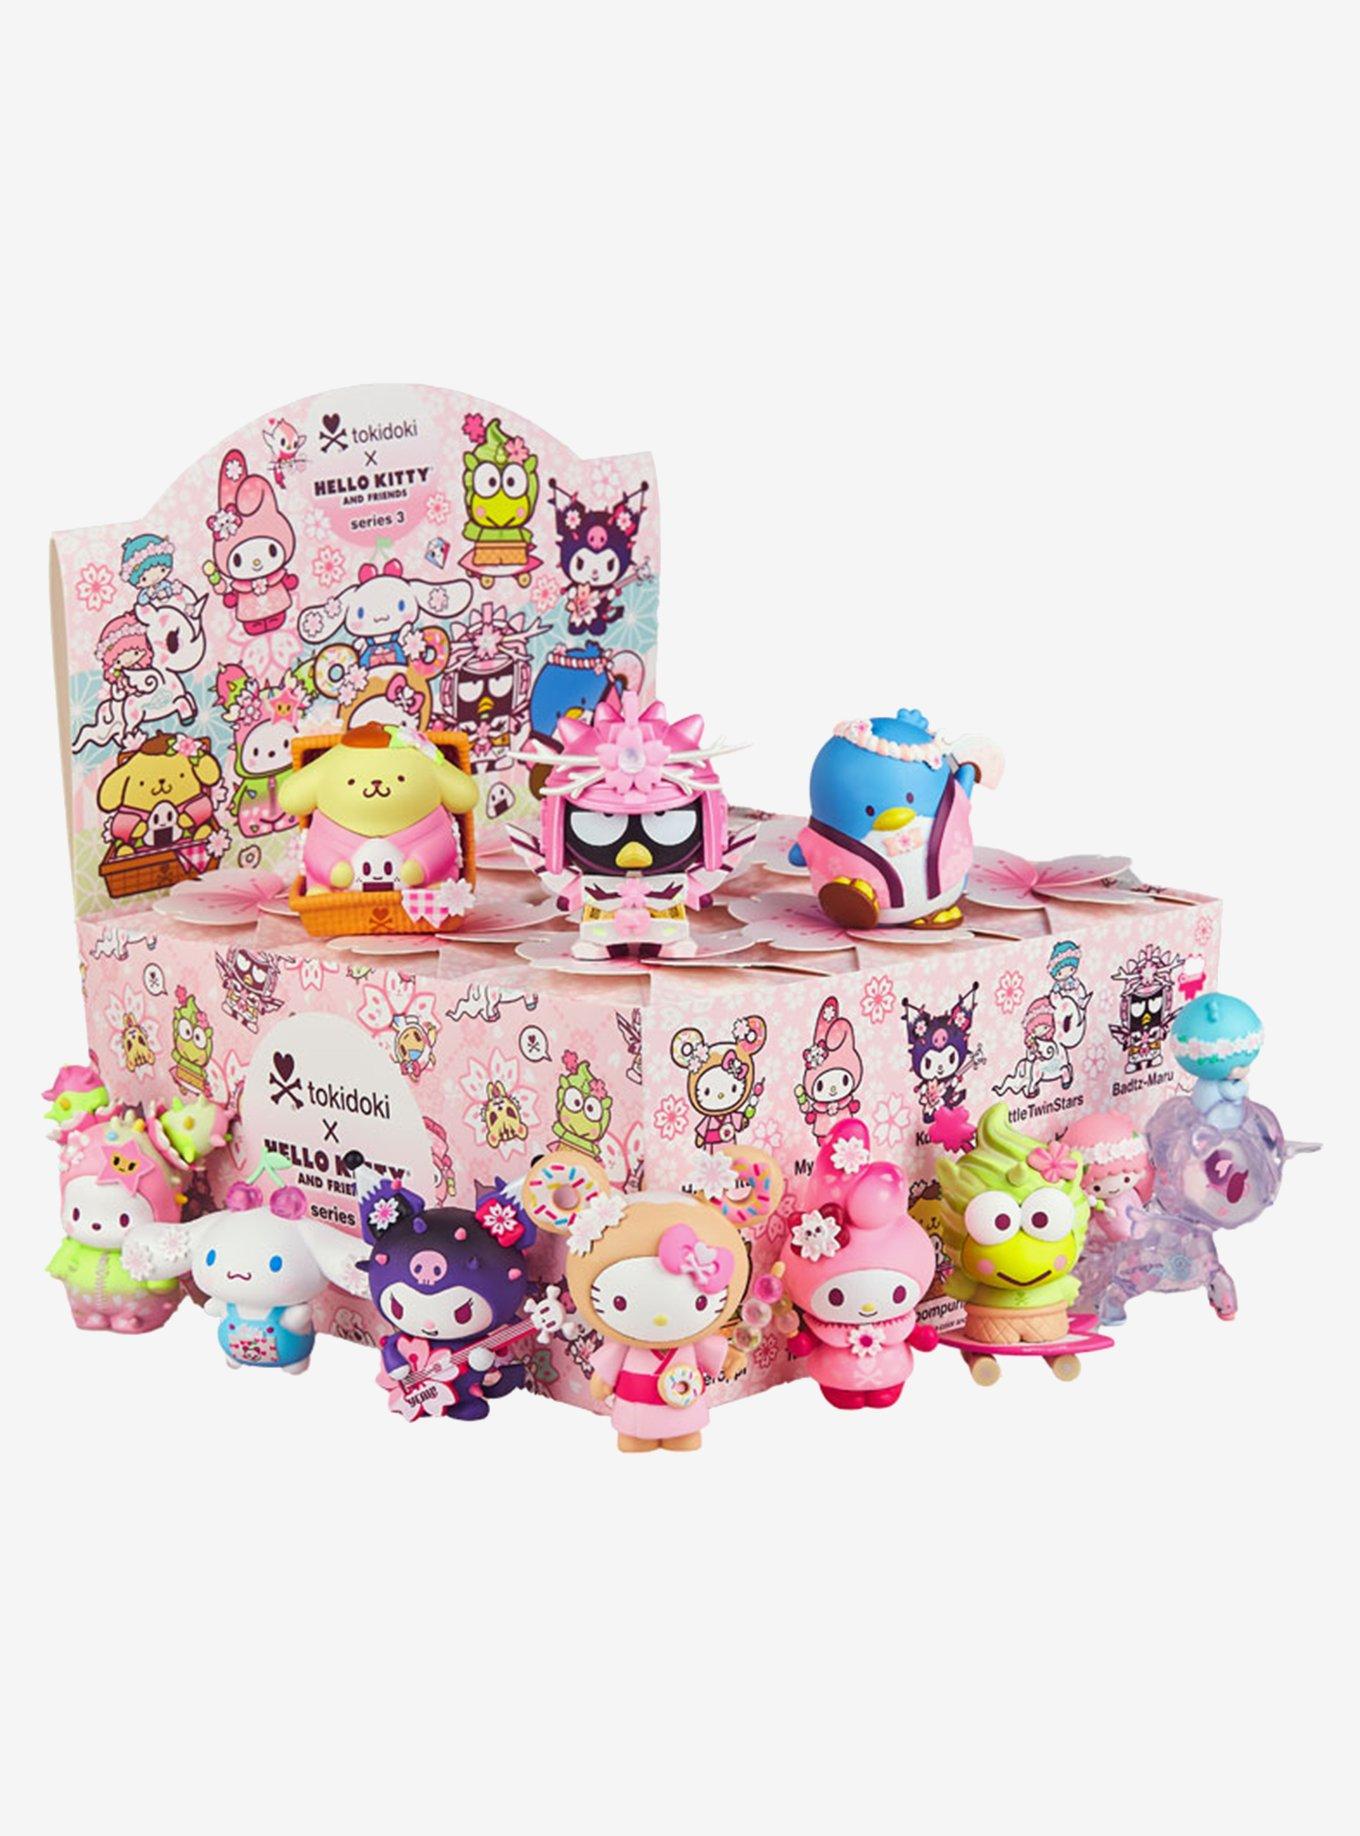 Tokidoki X Hello Kitty And Friends Series 3 Blind Box Figure